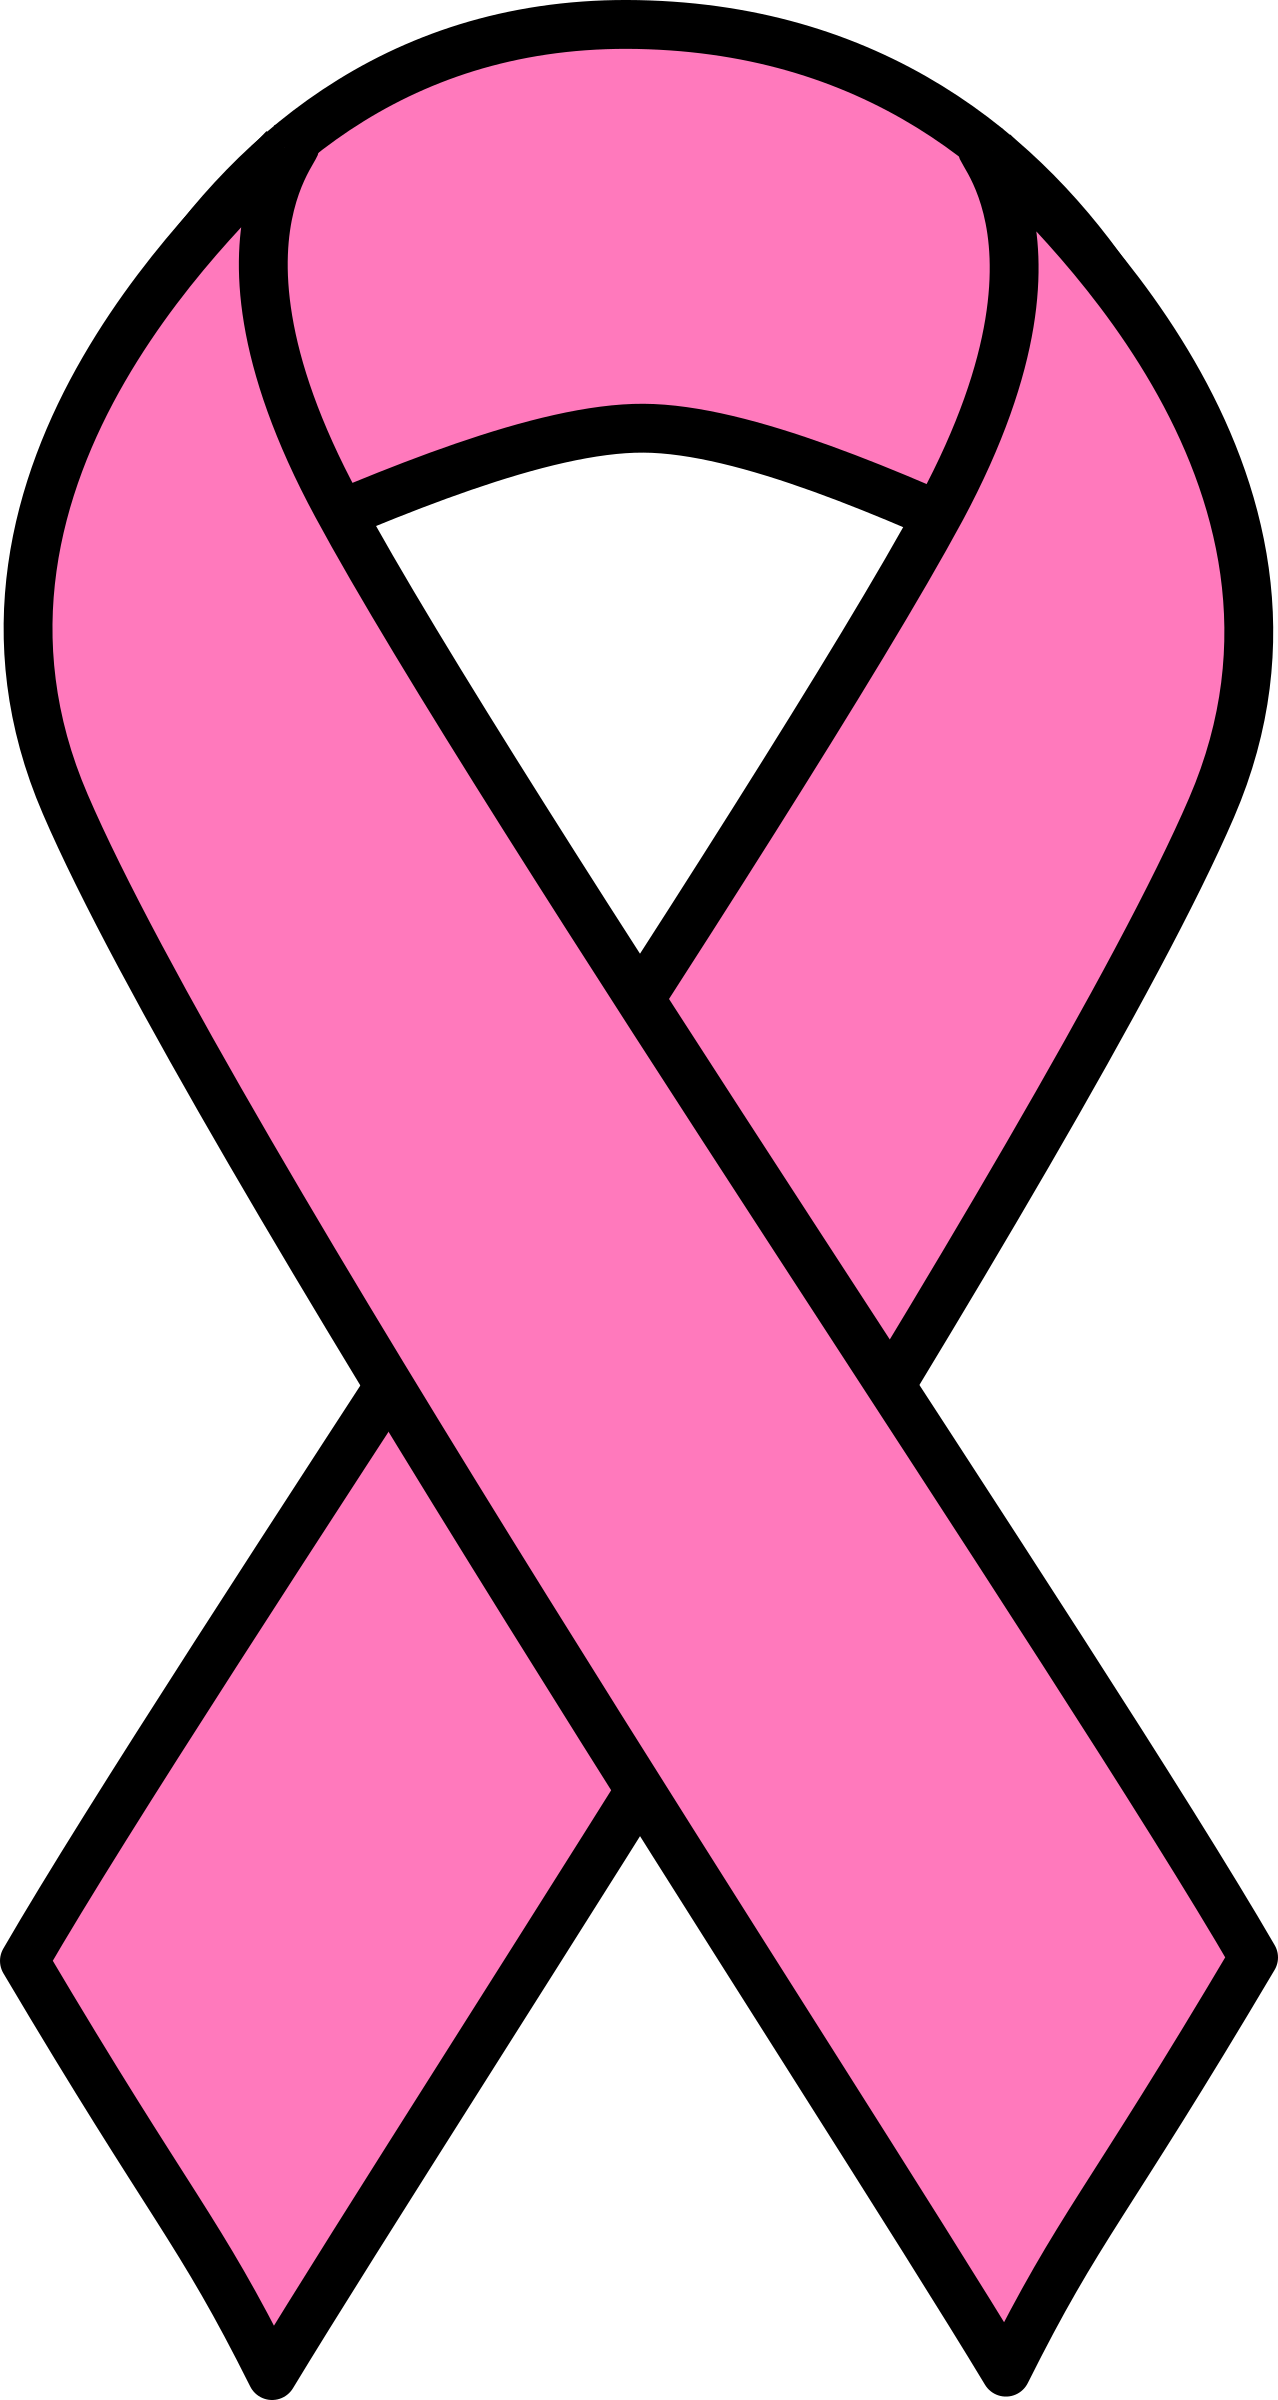 ... Printable breast cancer ribbon clipart 2 clipartall - Cliparting clipartall.com ...